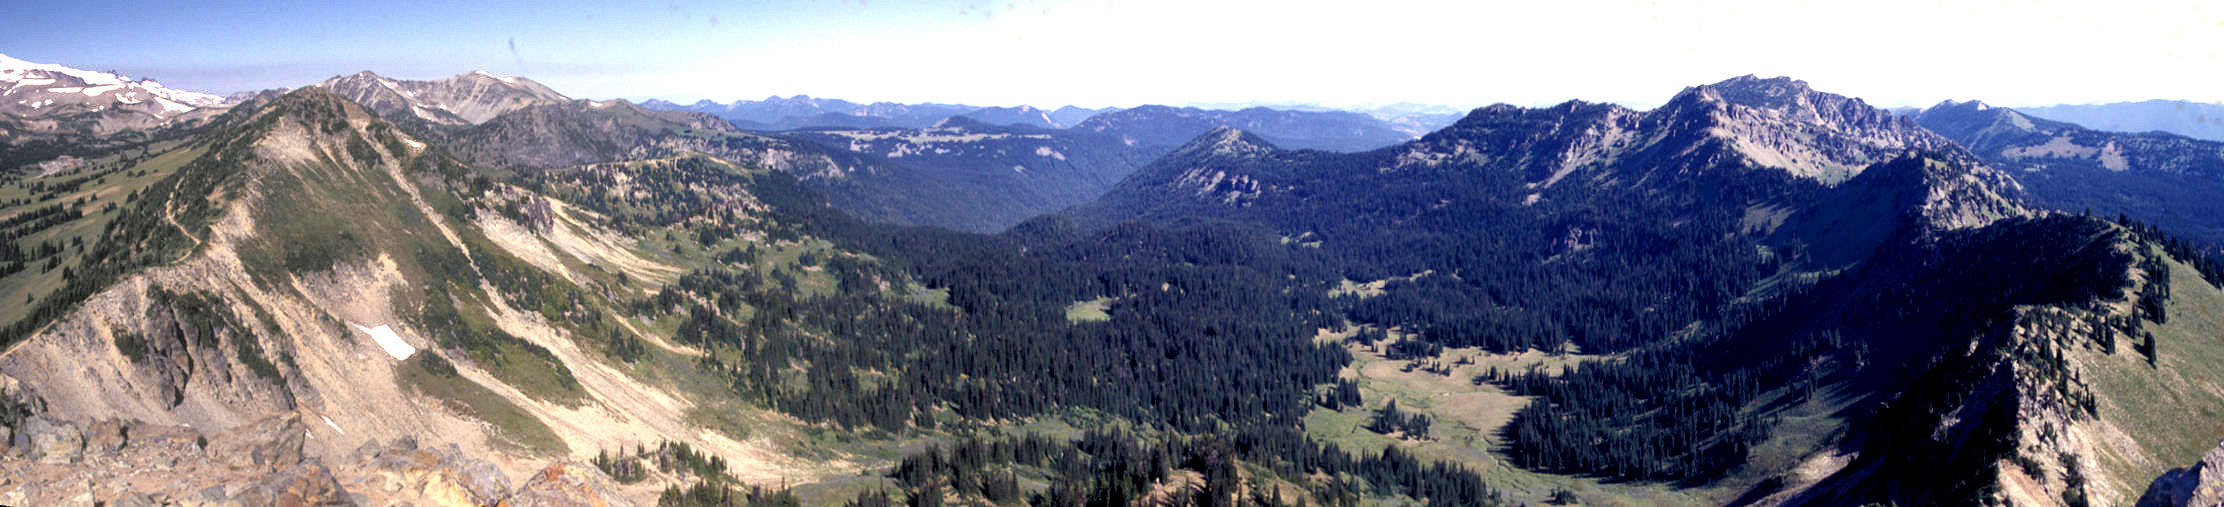 Sourdough Ridge & Panorama Northwest to Northeast from Dege Peak 7000' near Sunrise Visitor Center, Mt. Rainier National Park